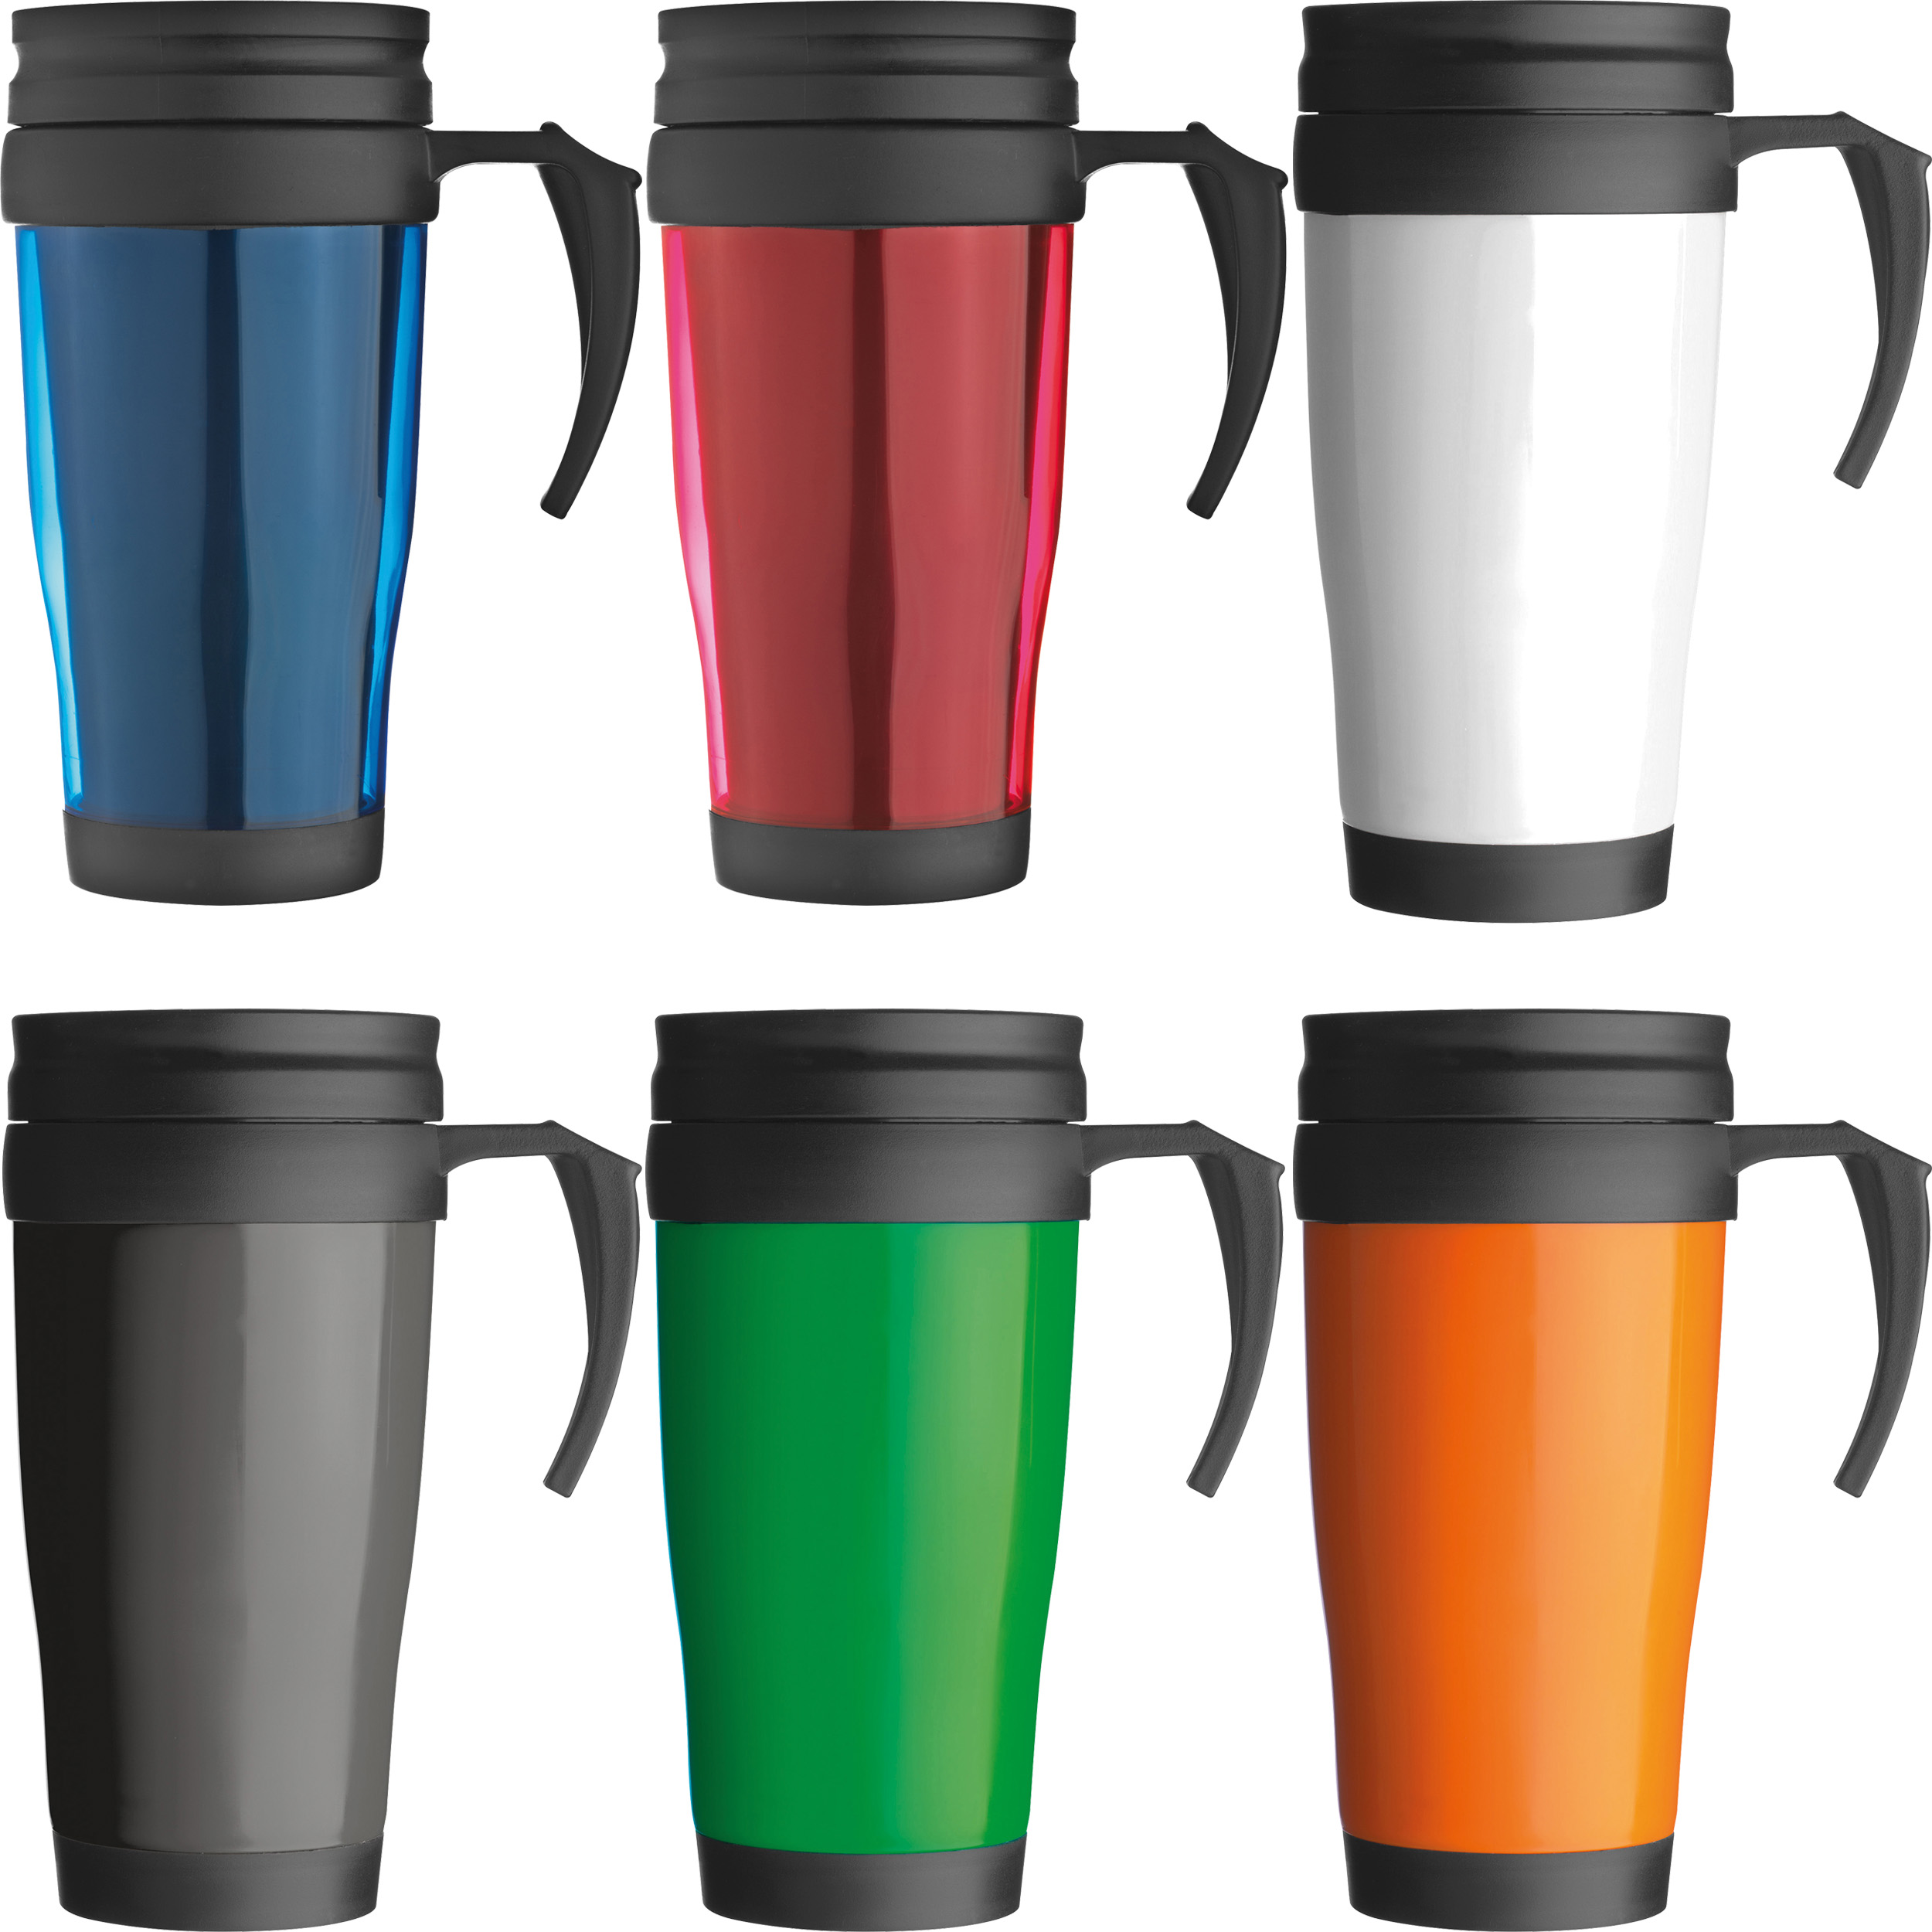 Plastic thermal travel mug – 0.4 l